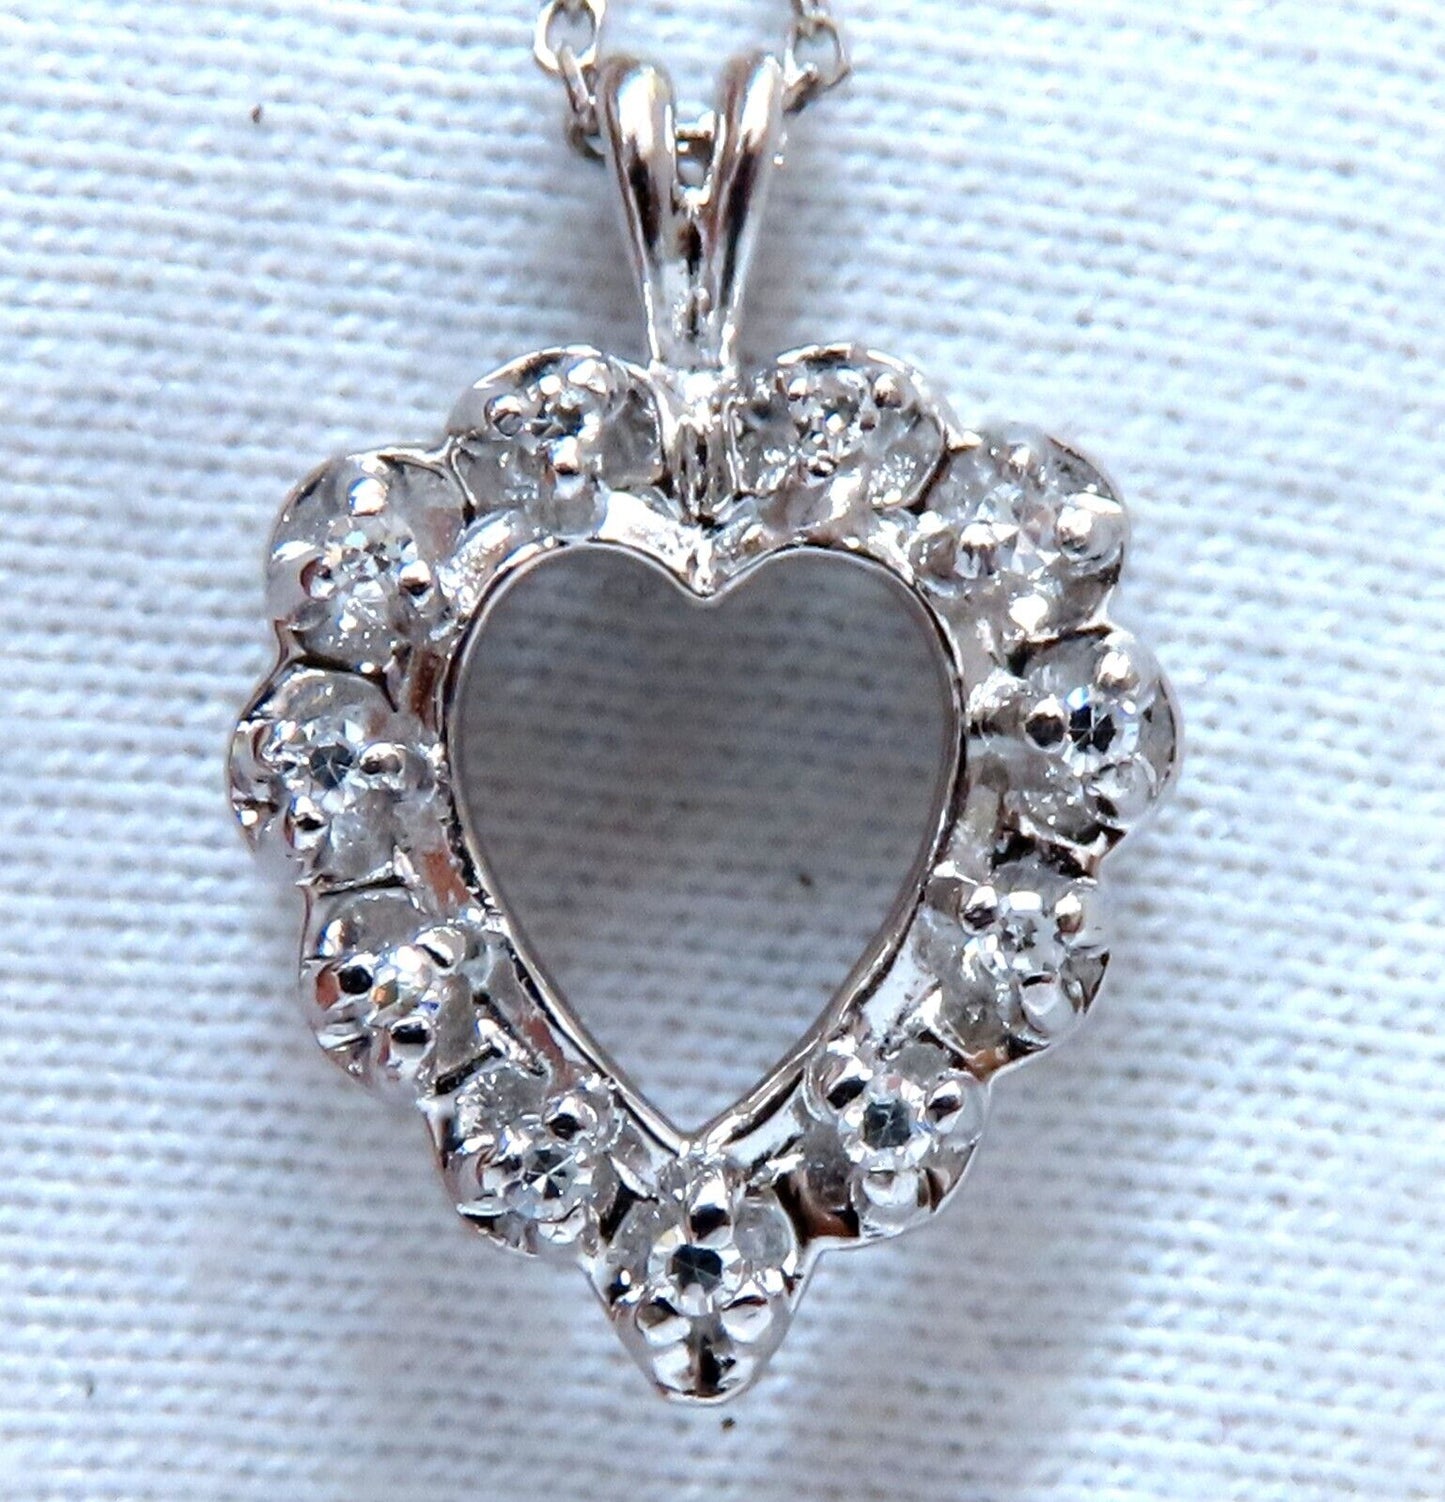 .20ct natural diamonds open heart necklace 14kt